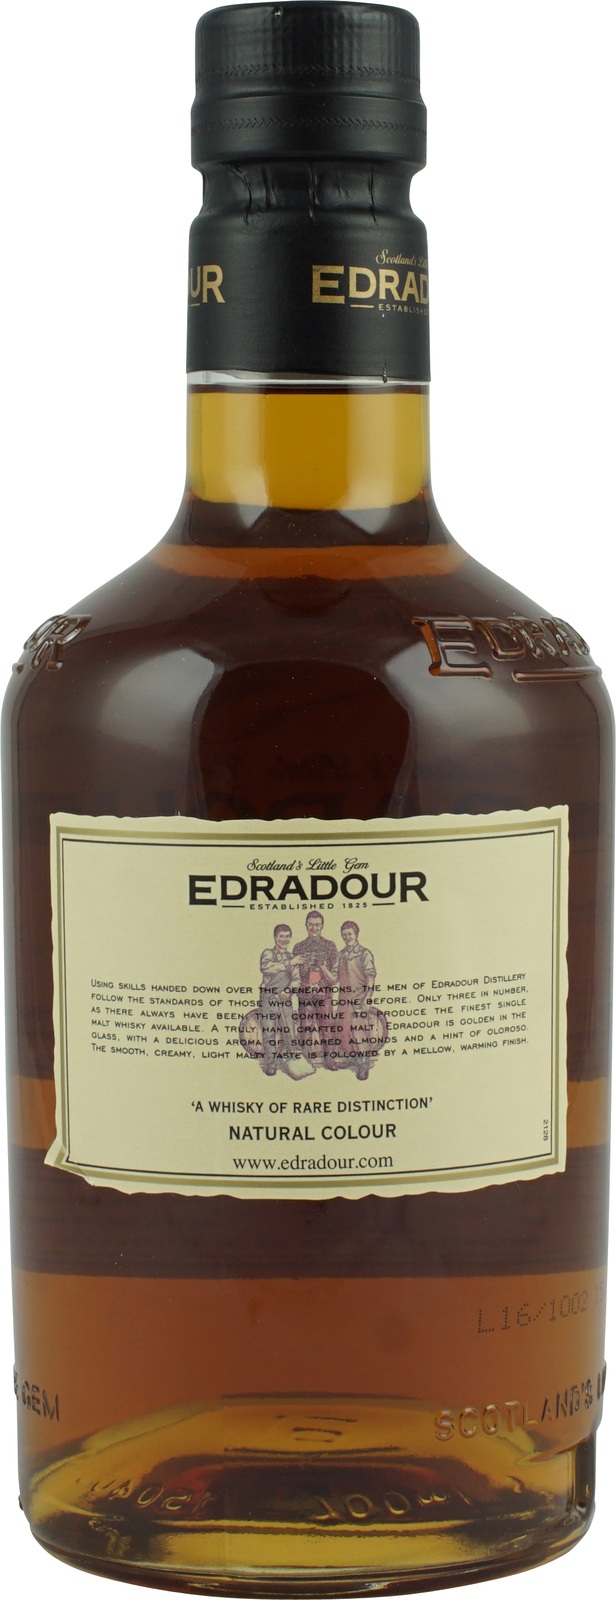 Malt Highland Edradour Scotch Whisky Single